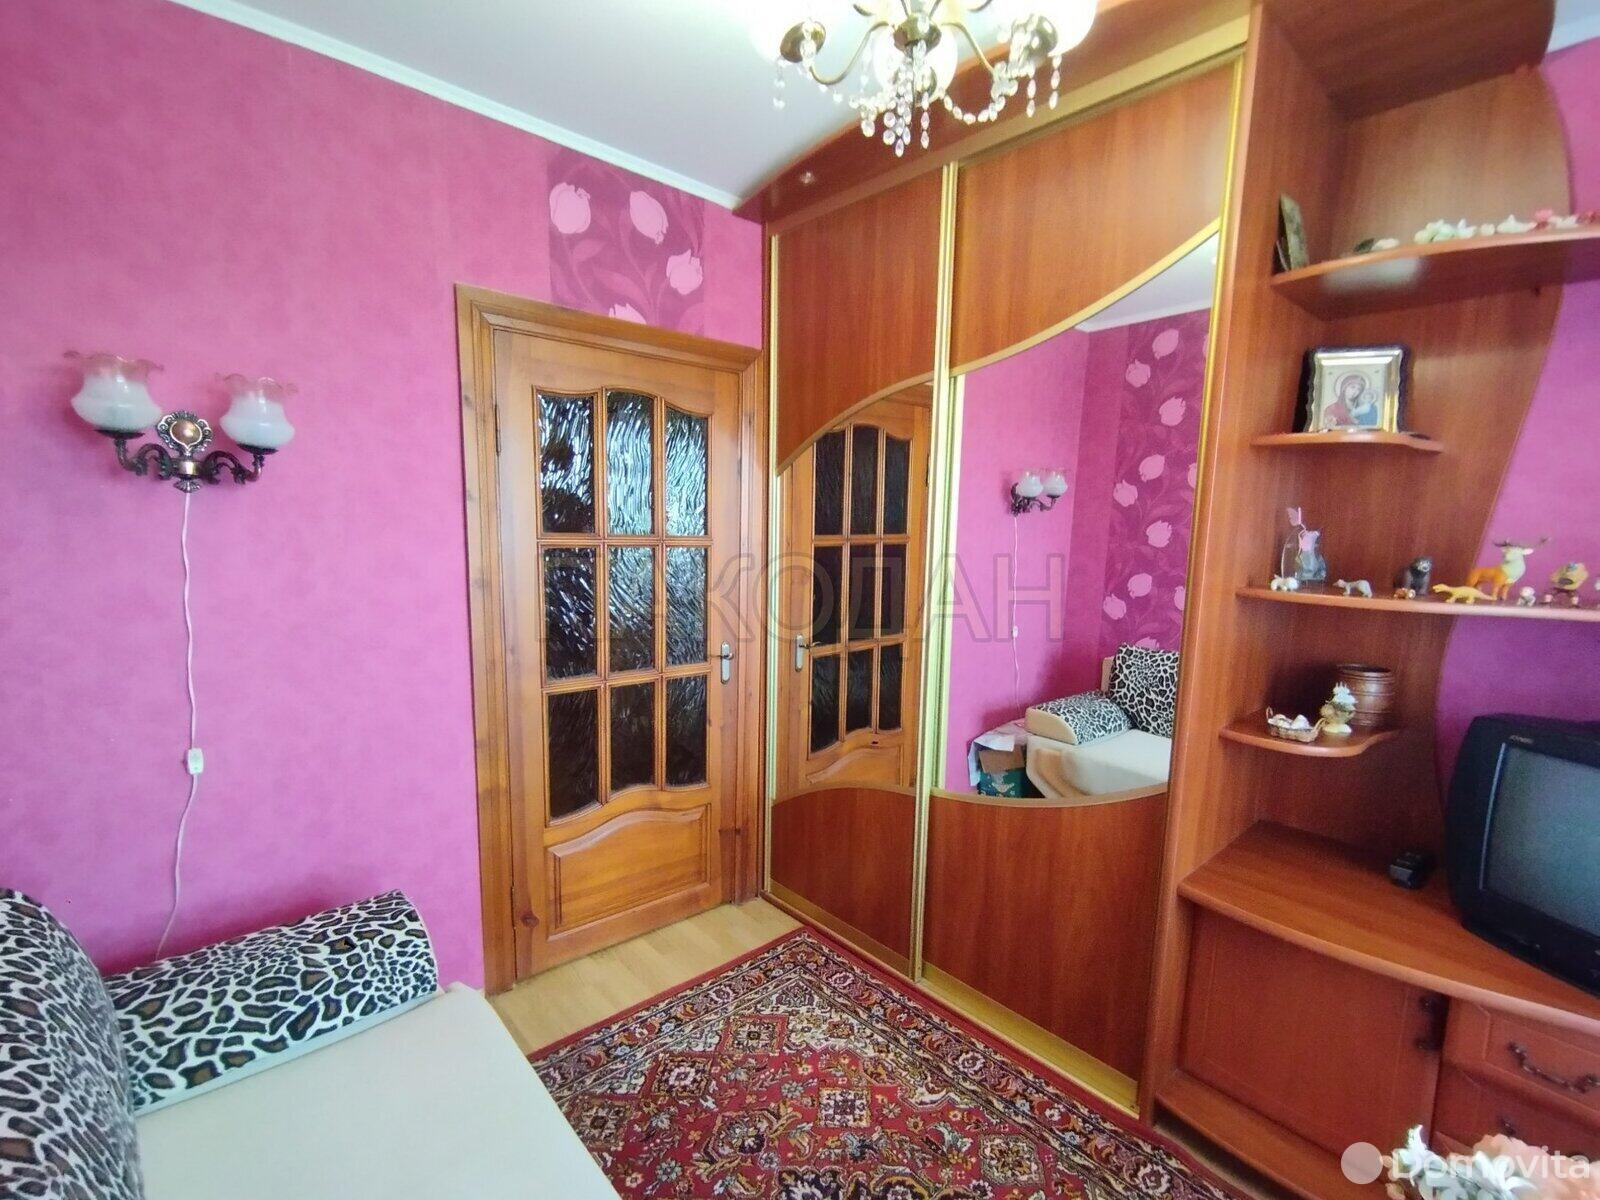 квартира, Барановичи, ул. Репина, стоимость продажи 112 581 р.